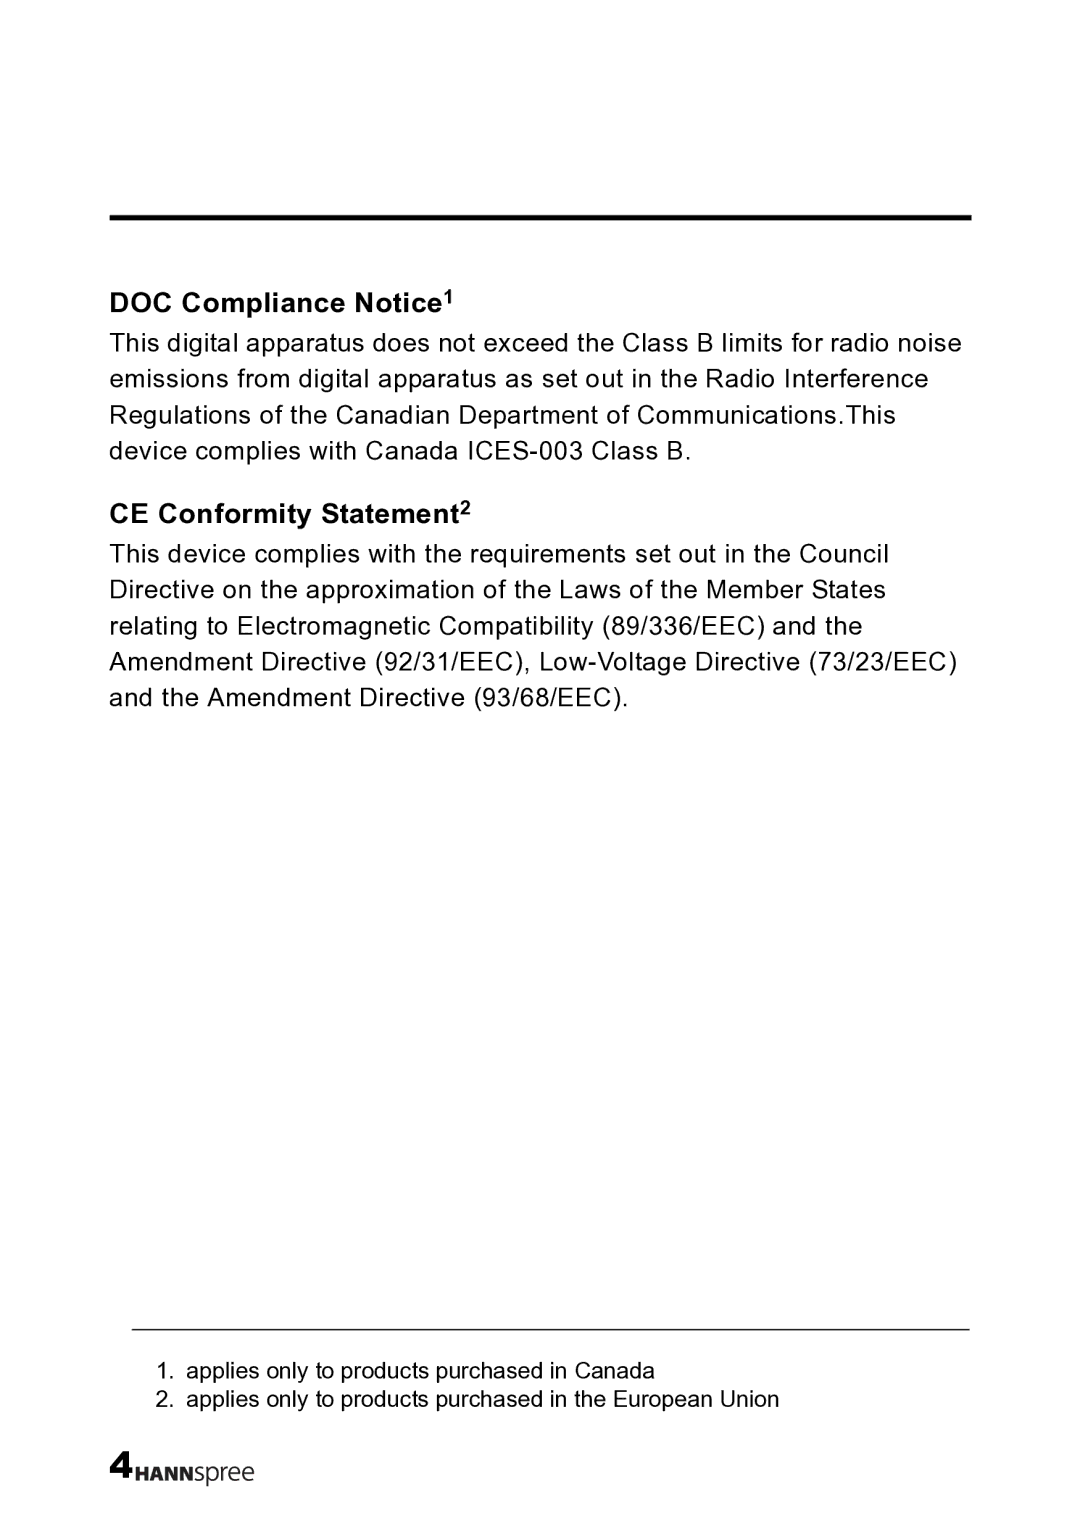 HANNspree LT12-23U1-000 user manual DOC Compliance Notice1, CE Conformity Statement2 